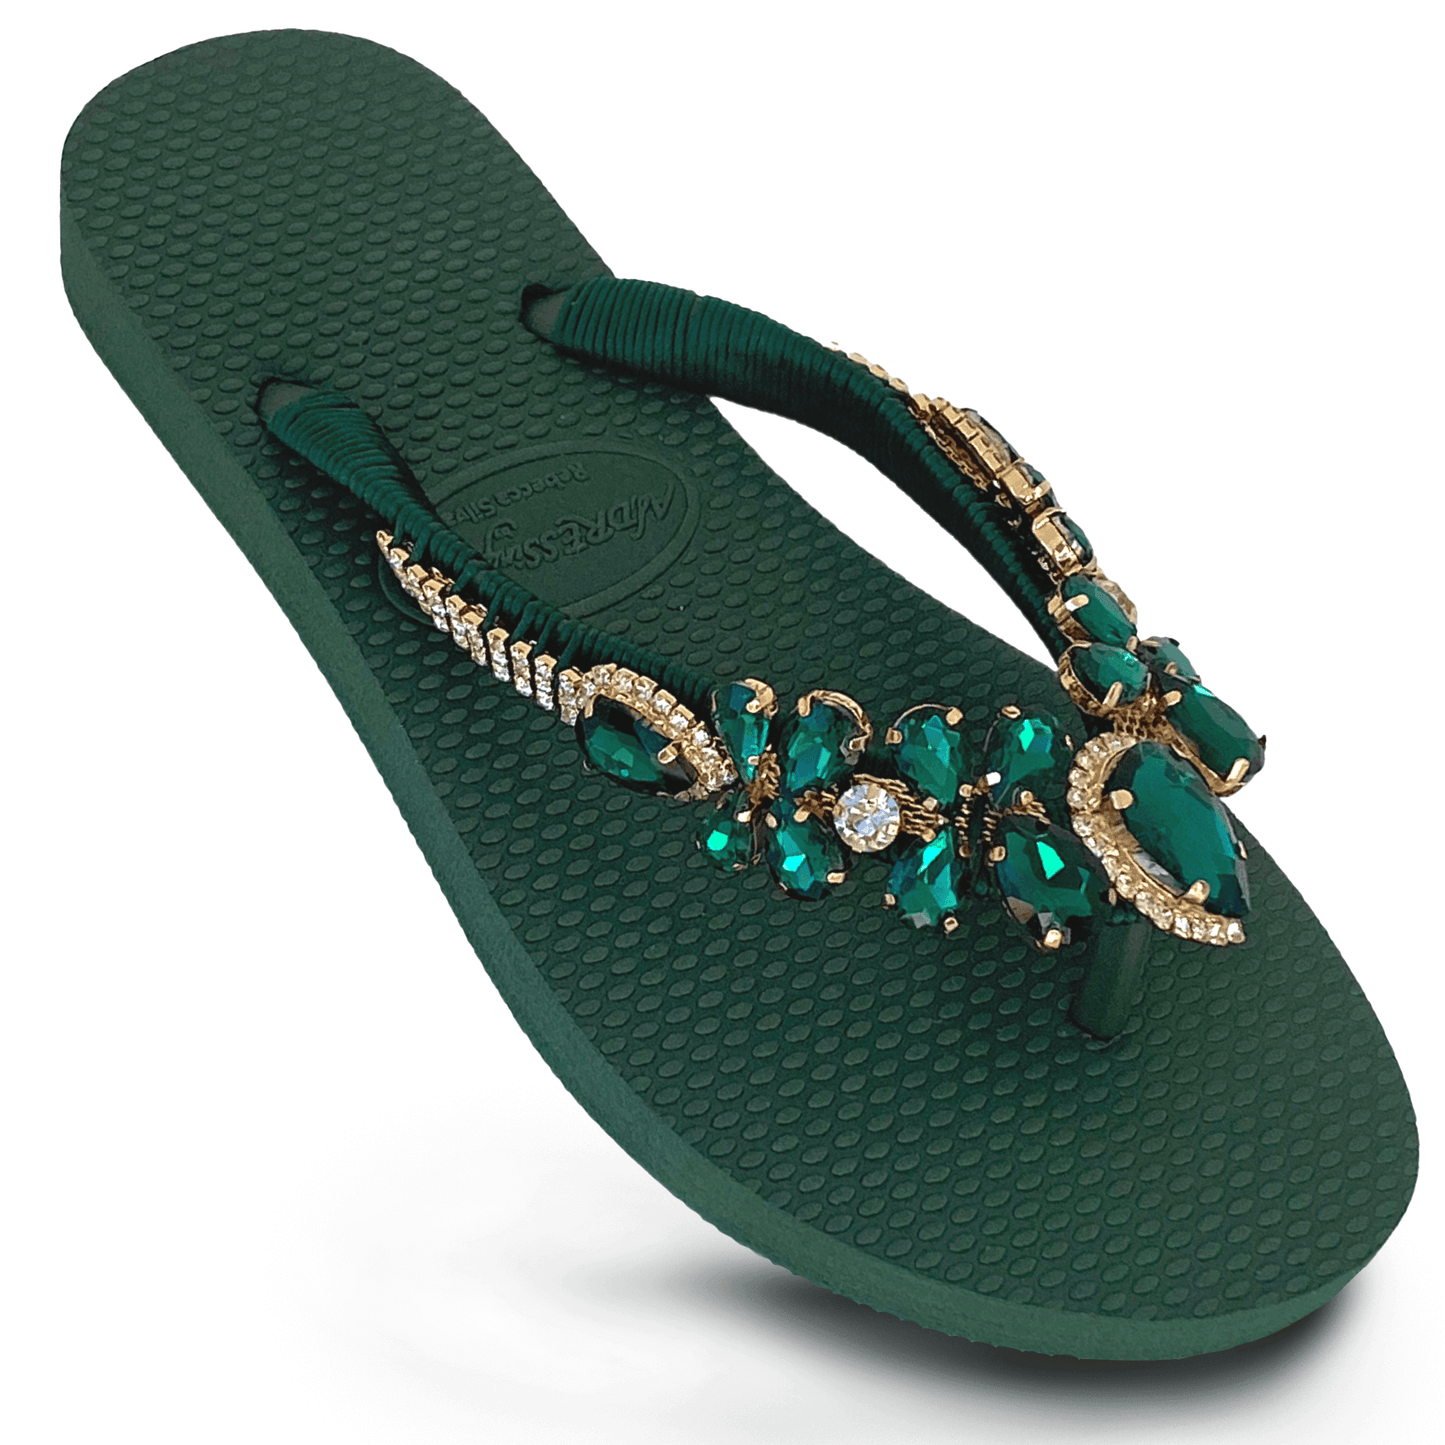 AdDRESSingMe™ Emerald Green Luxurious Flip Flops With Rhinestones - AdDRESSingMe